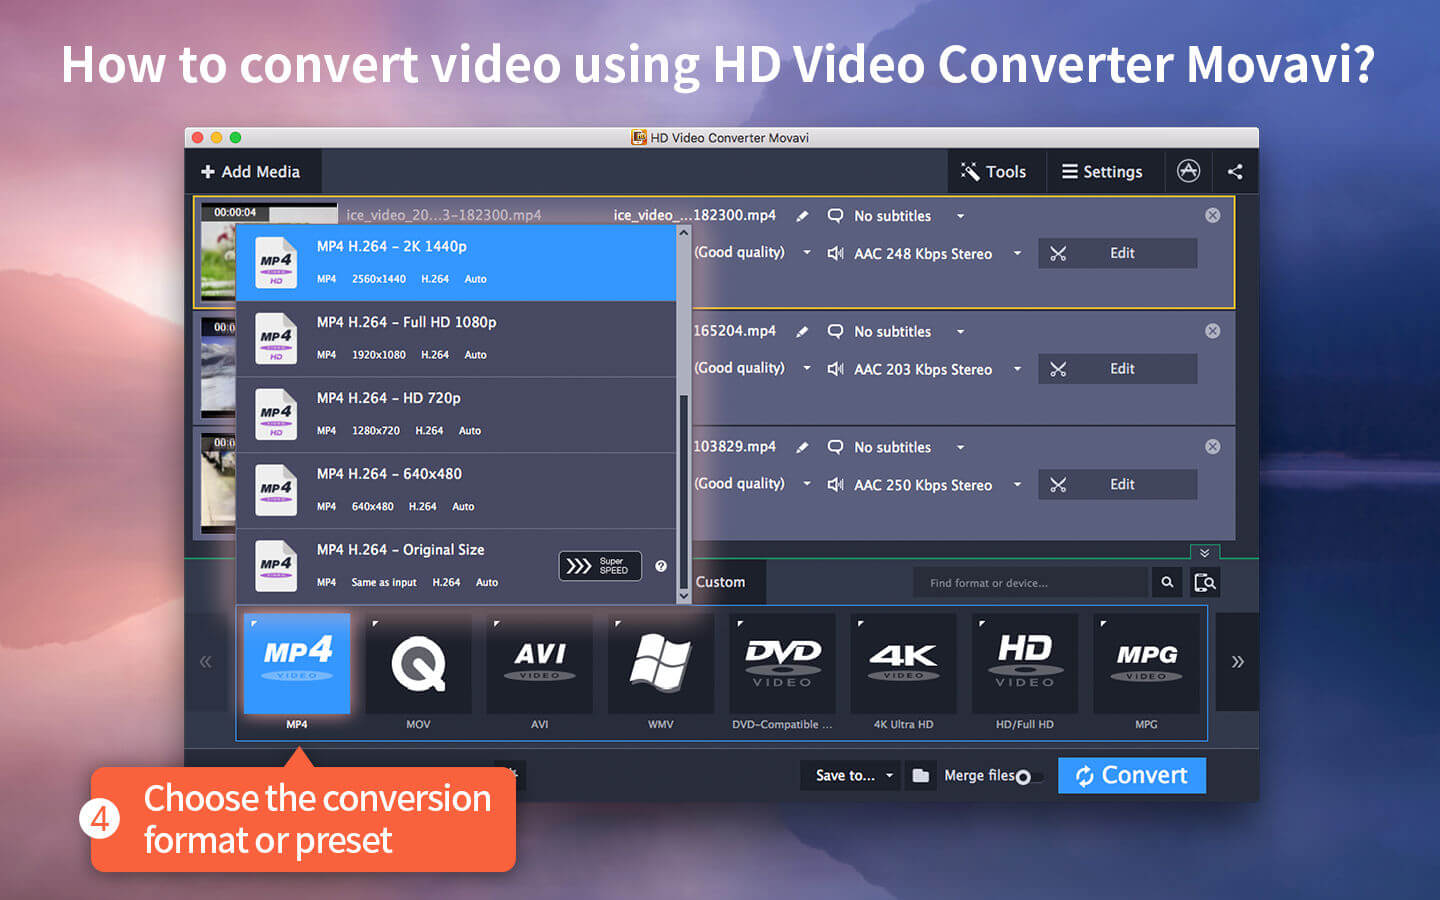 Hd video converter movavi 6.1.0 cr2 free